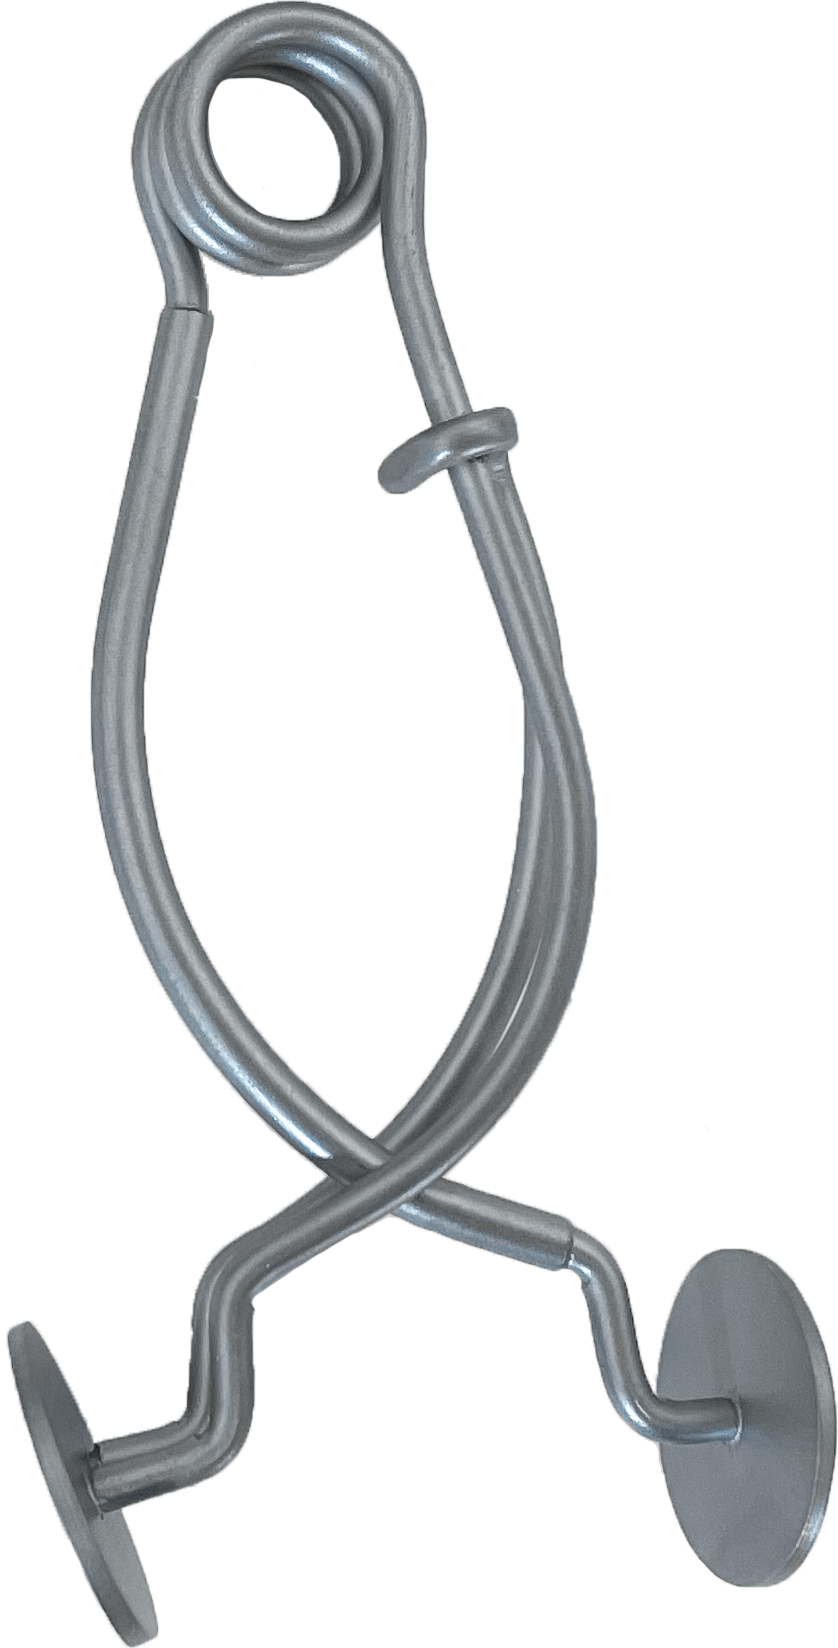 Stockman penile clamp